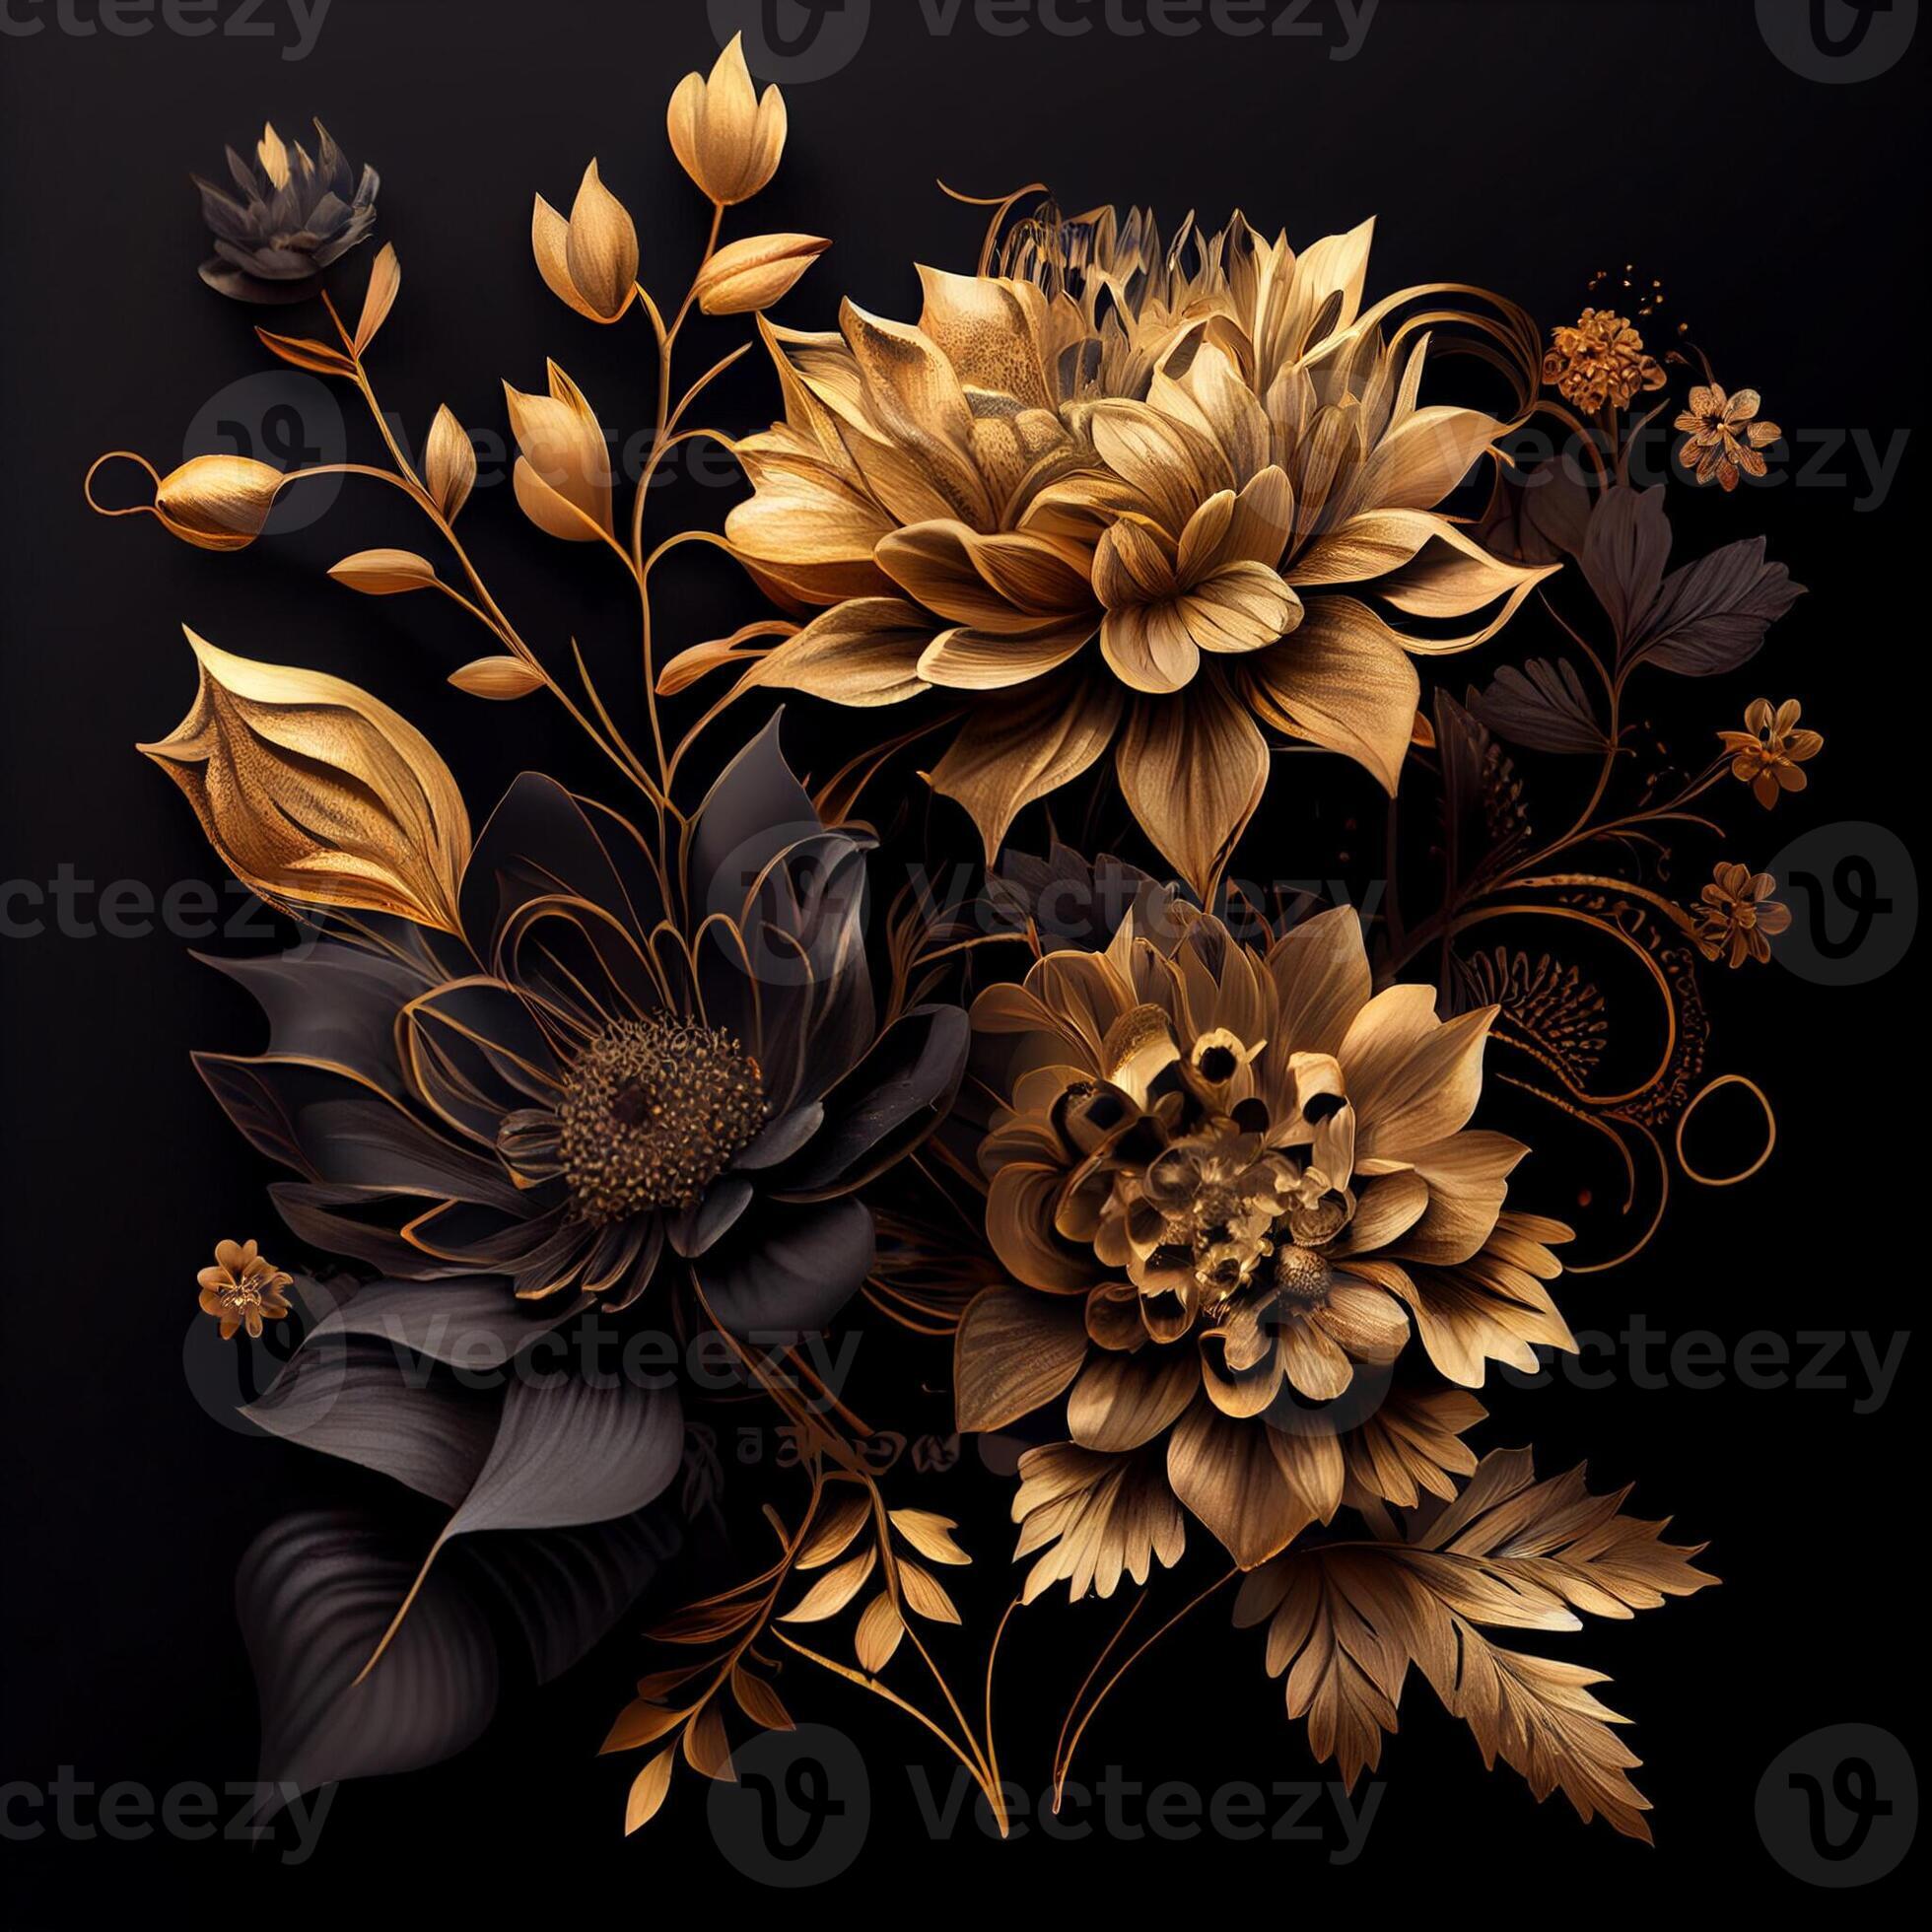 Golden flowers | Sticker